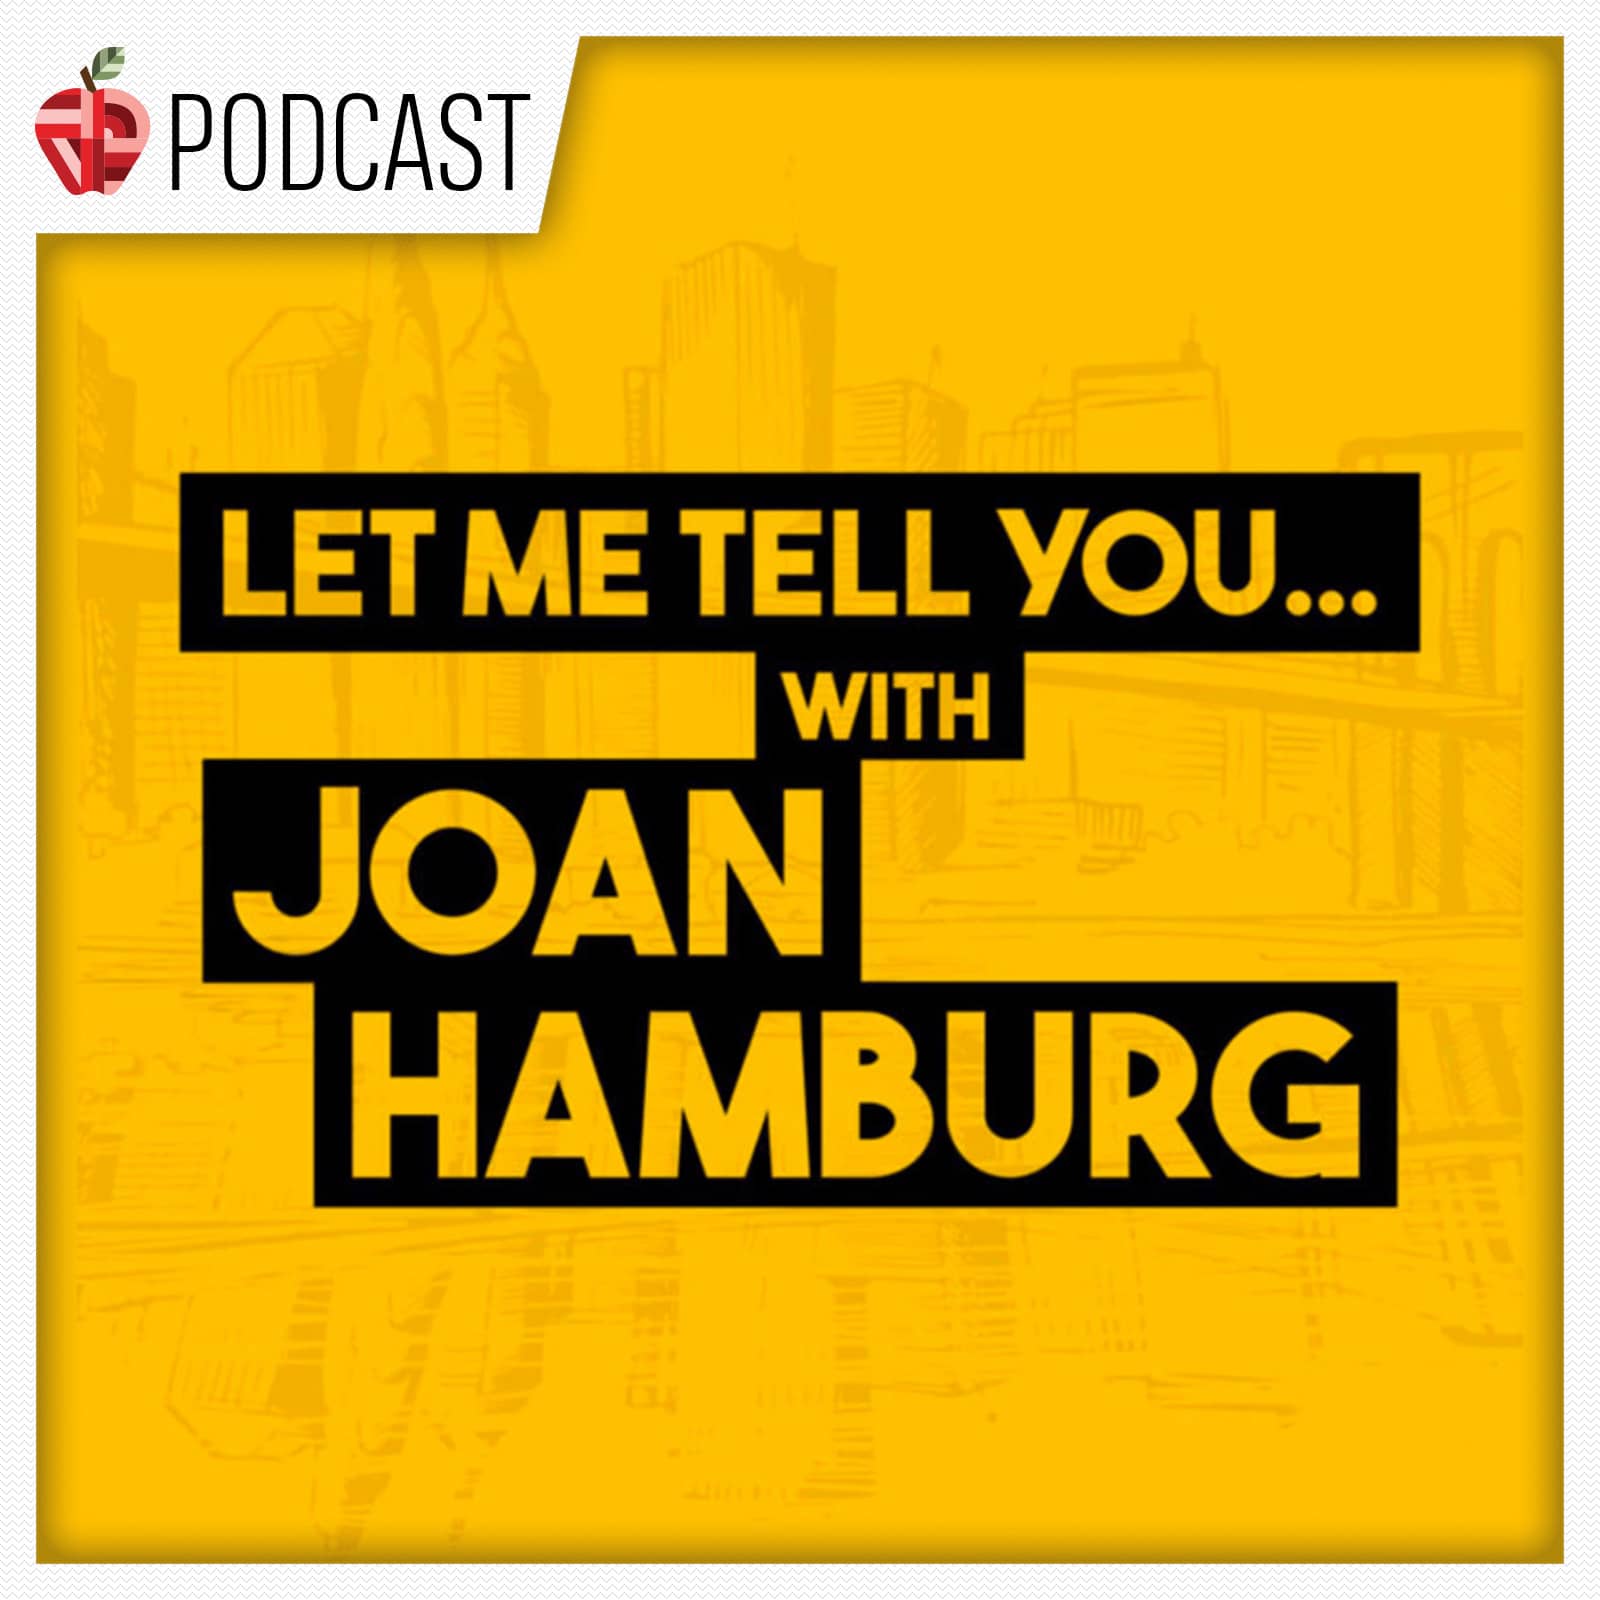 joan-hamburg-let-me-tell-you-podcast-podcast-logo-21